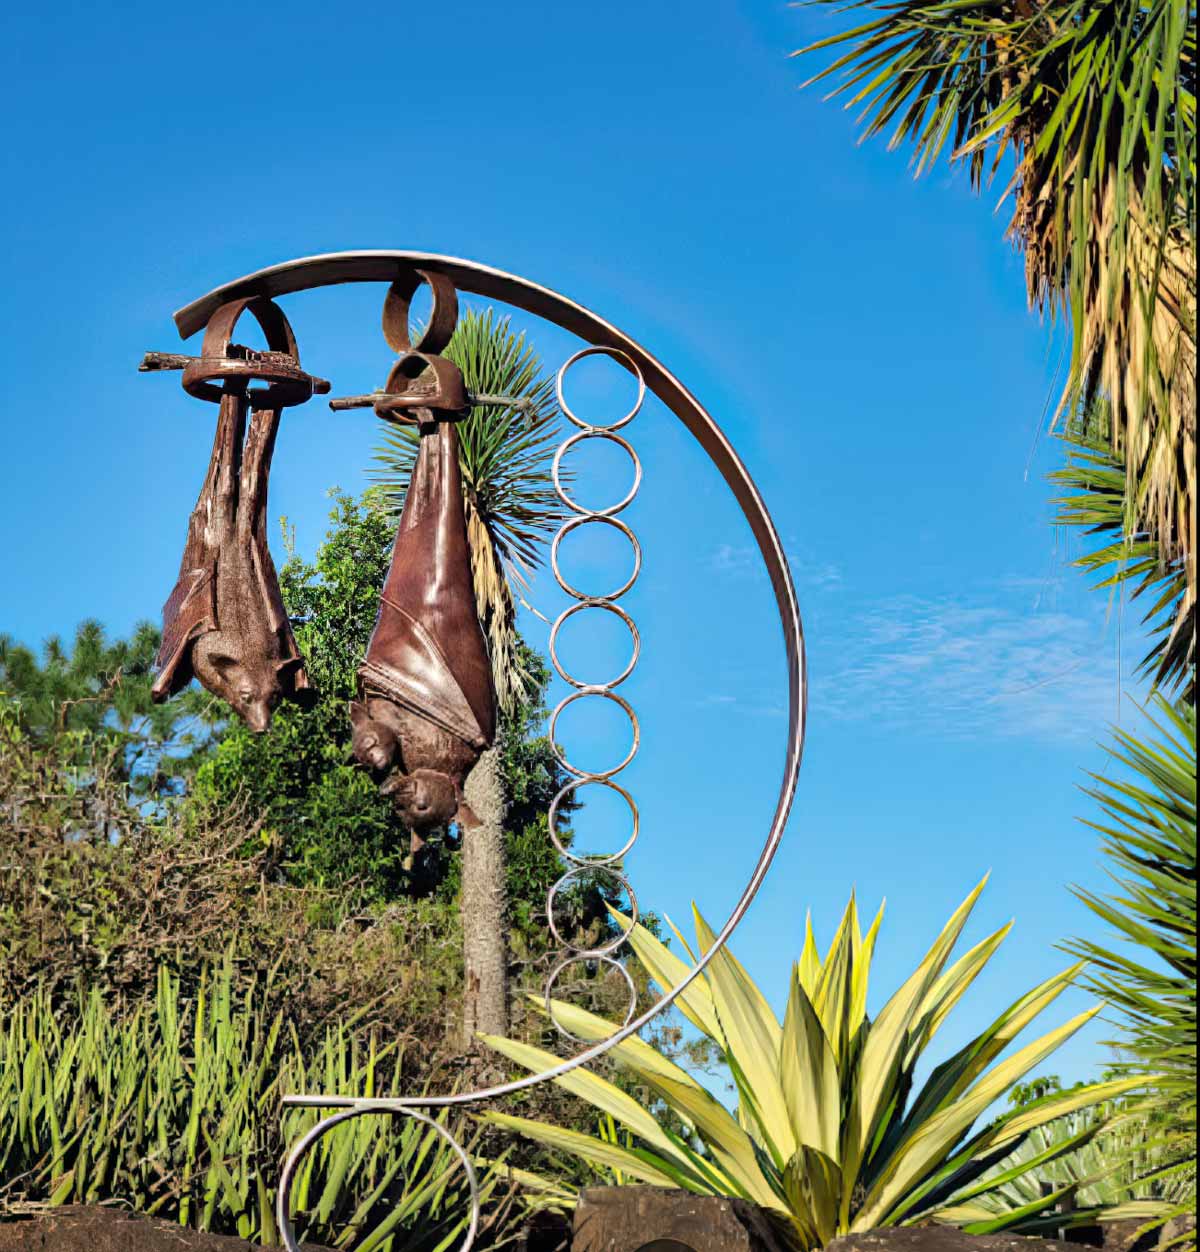 A sculpture of Brisbane's famous Bats in the Botanical Gardens.